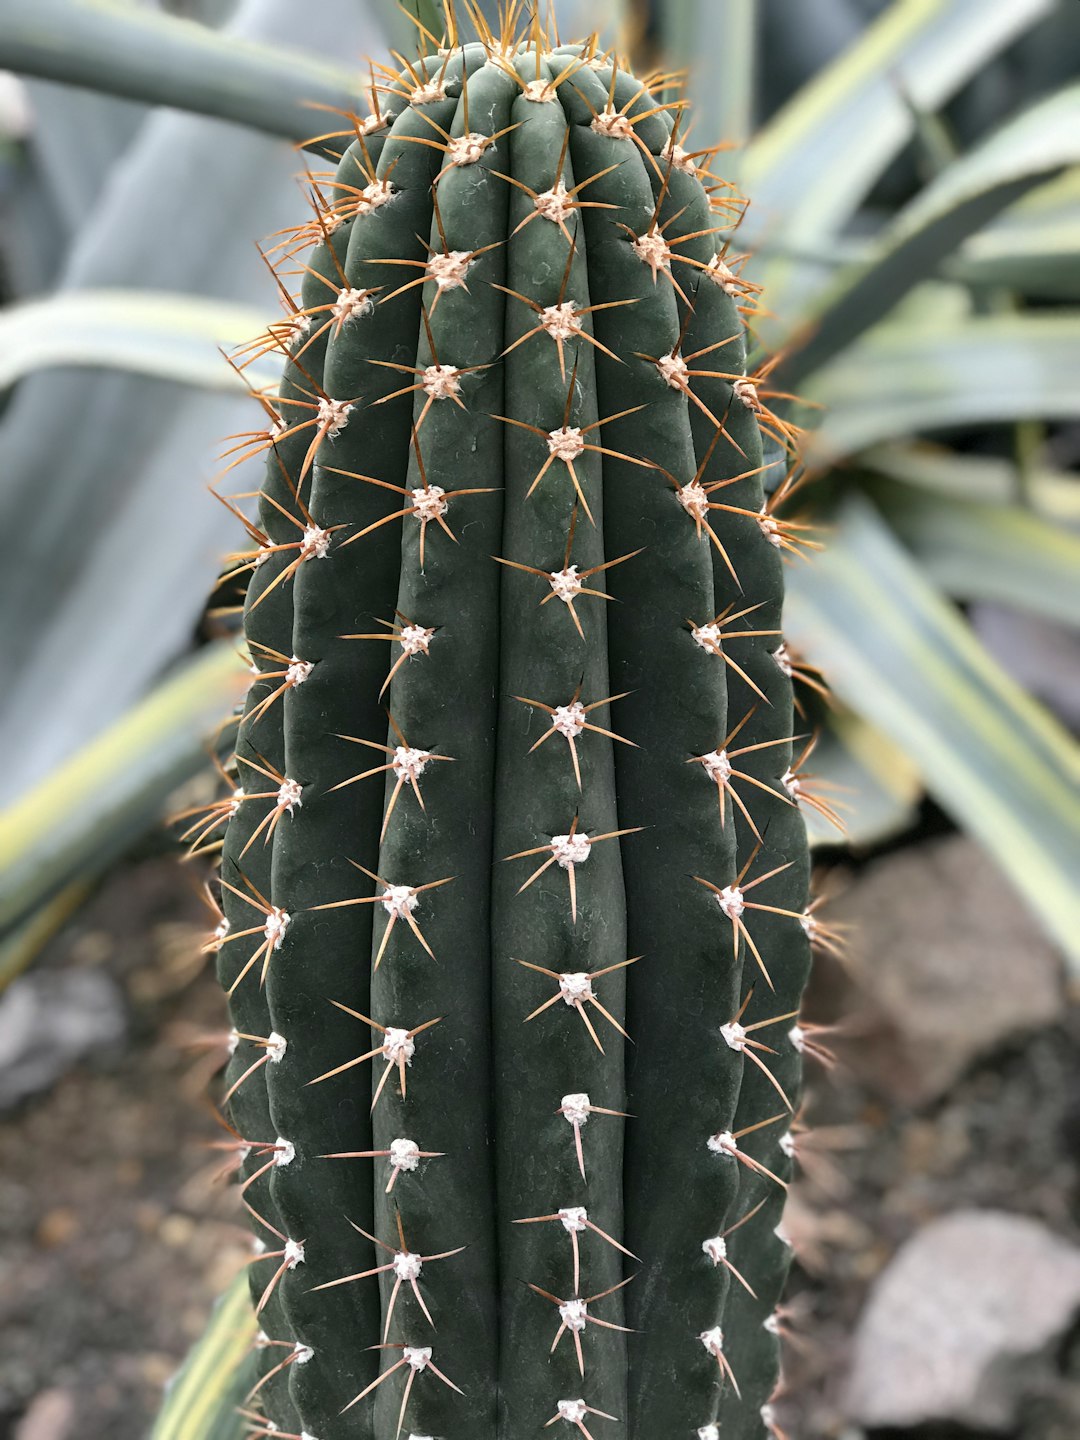 Cactus at Kiev Botanical Garden